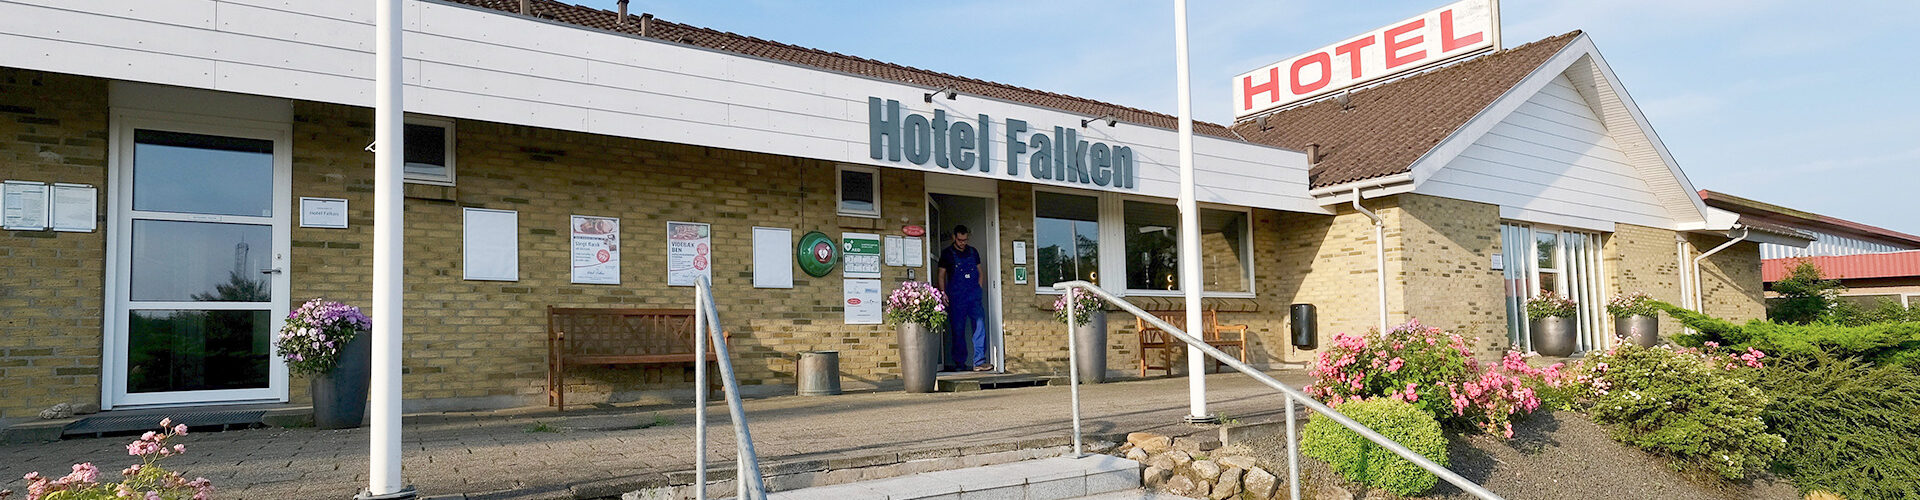 kaffe deres en kop Hotel Falken Arkiv - Danskedeals